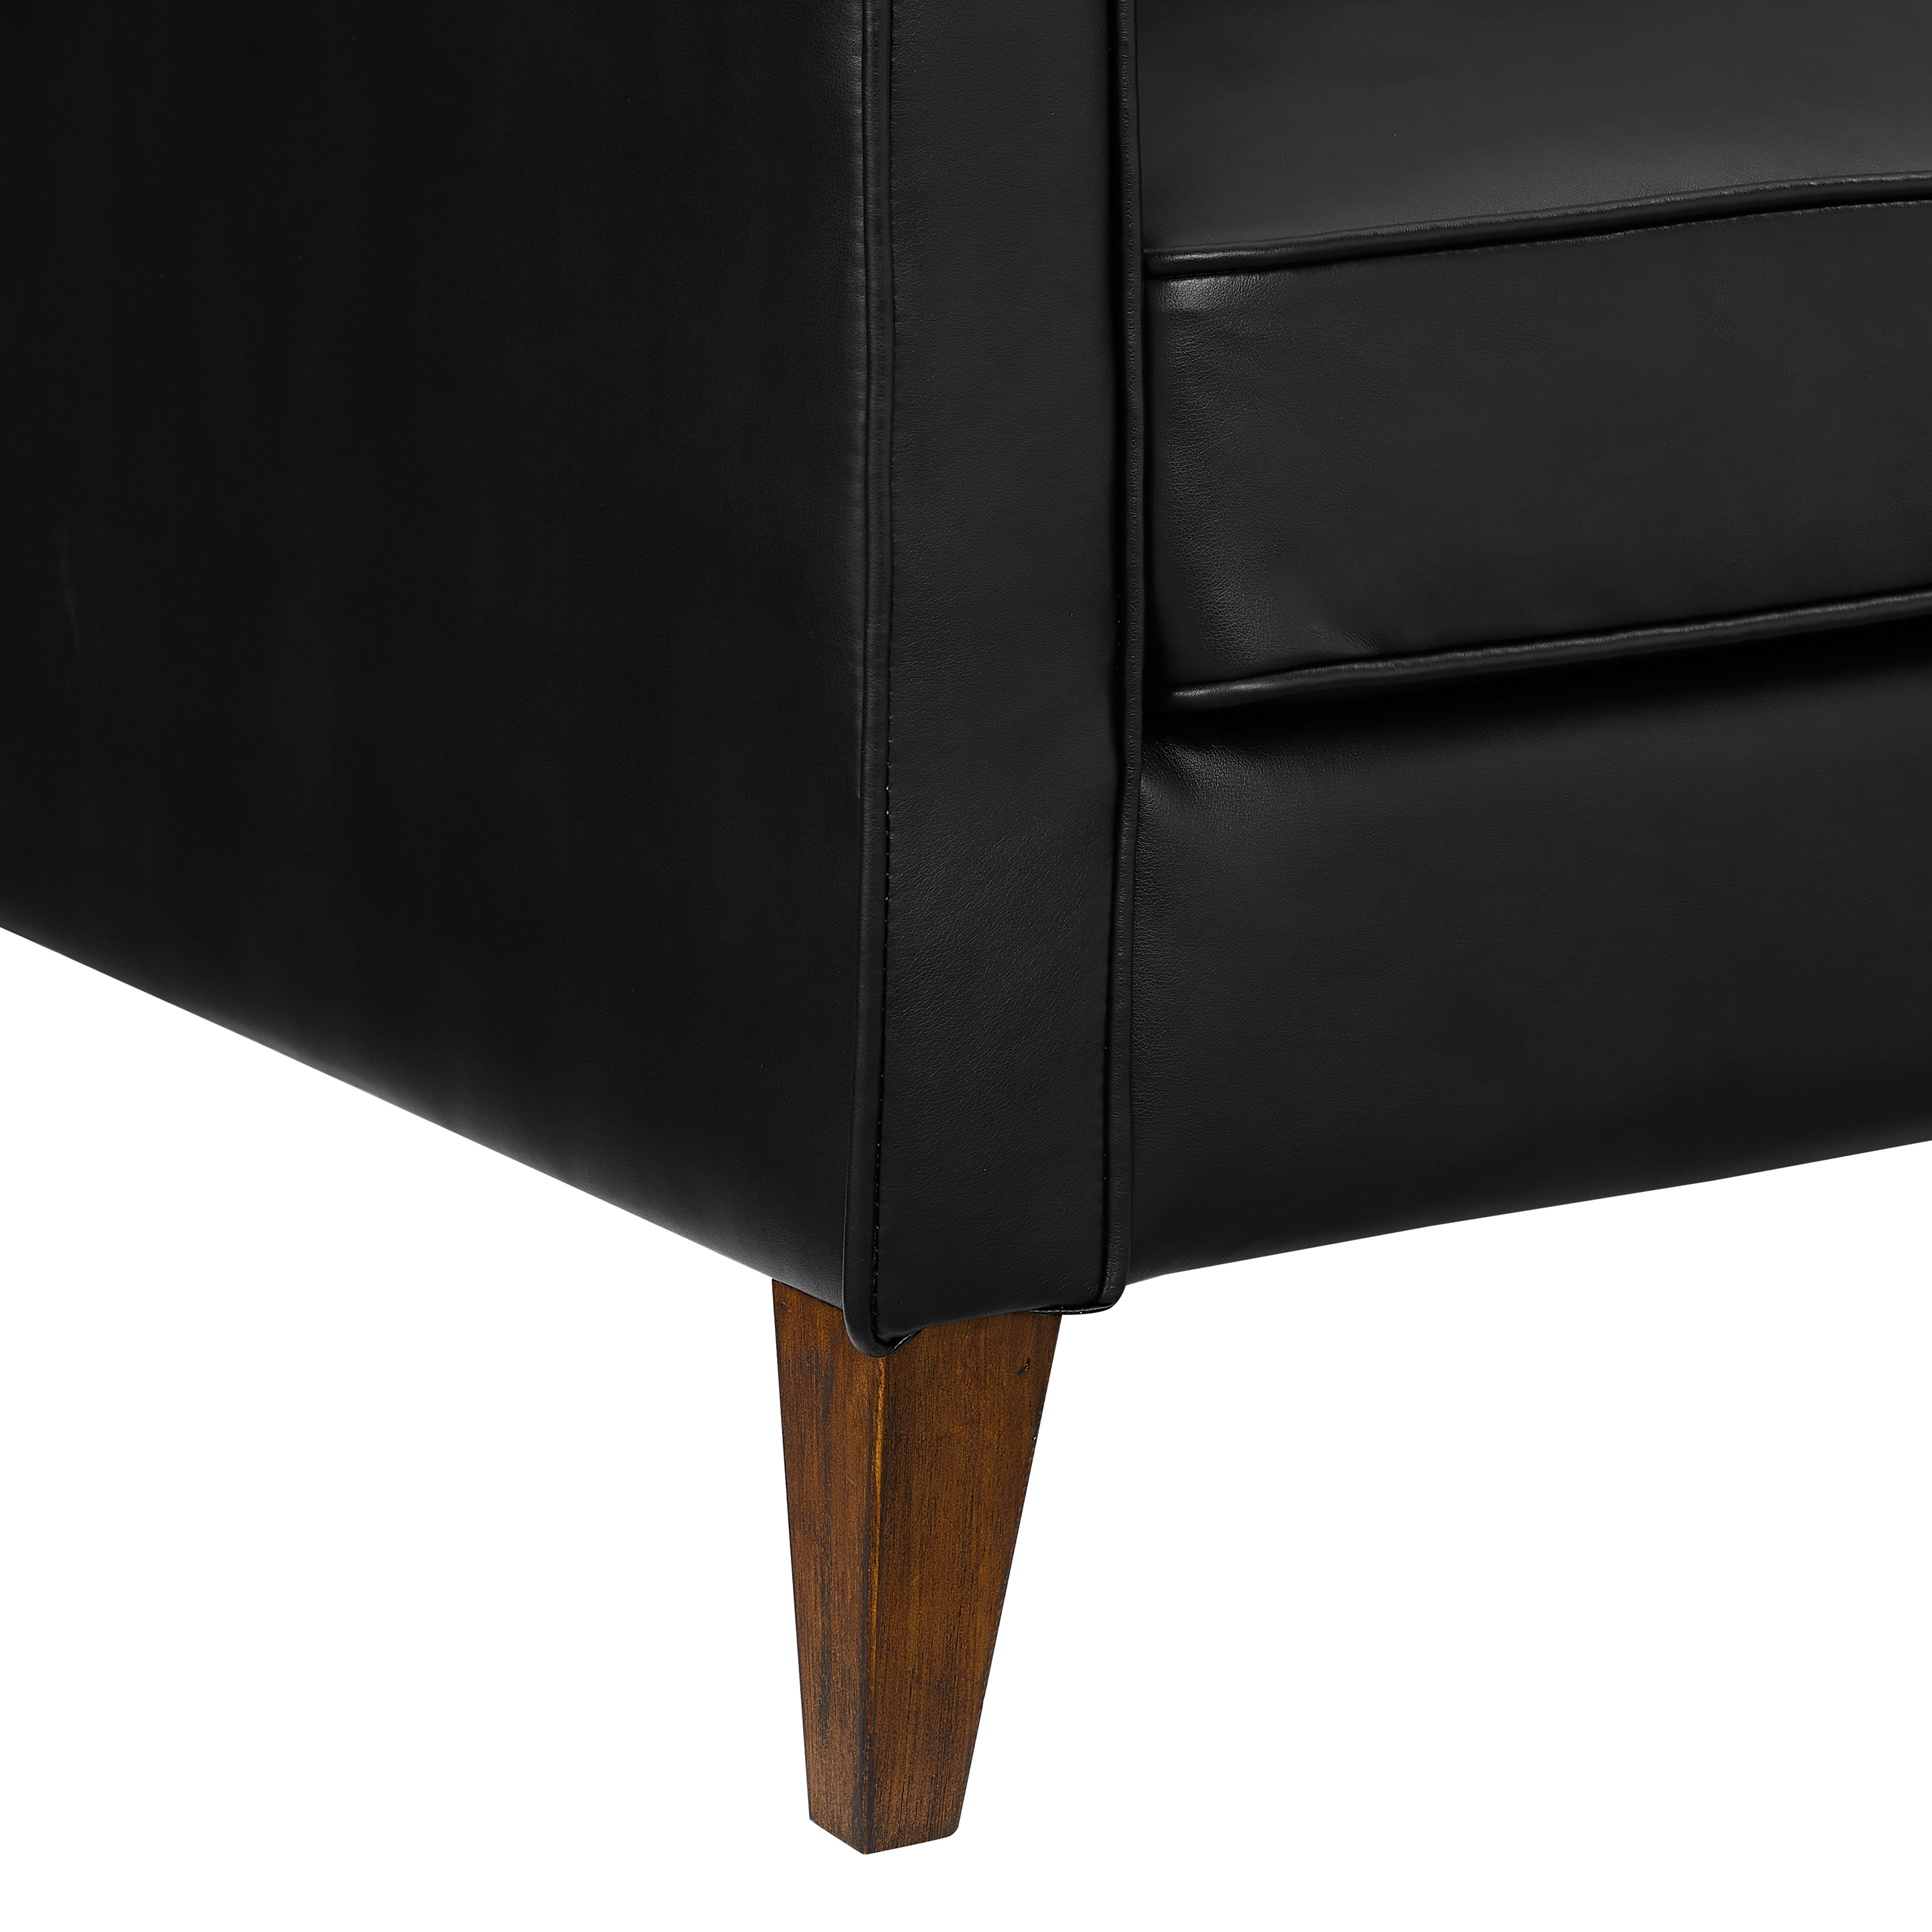 Hillsdale Jianna Faux Leather Sofa, Black - image 11 of 12